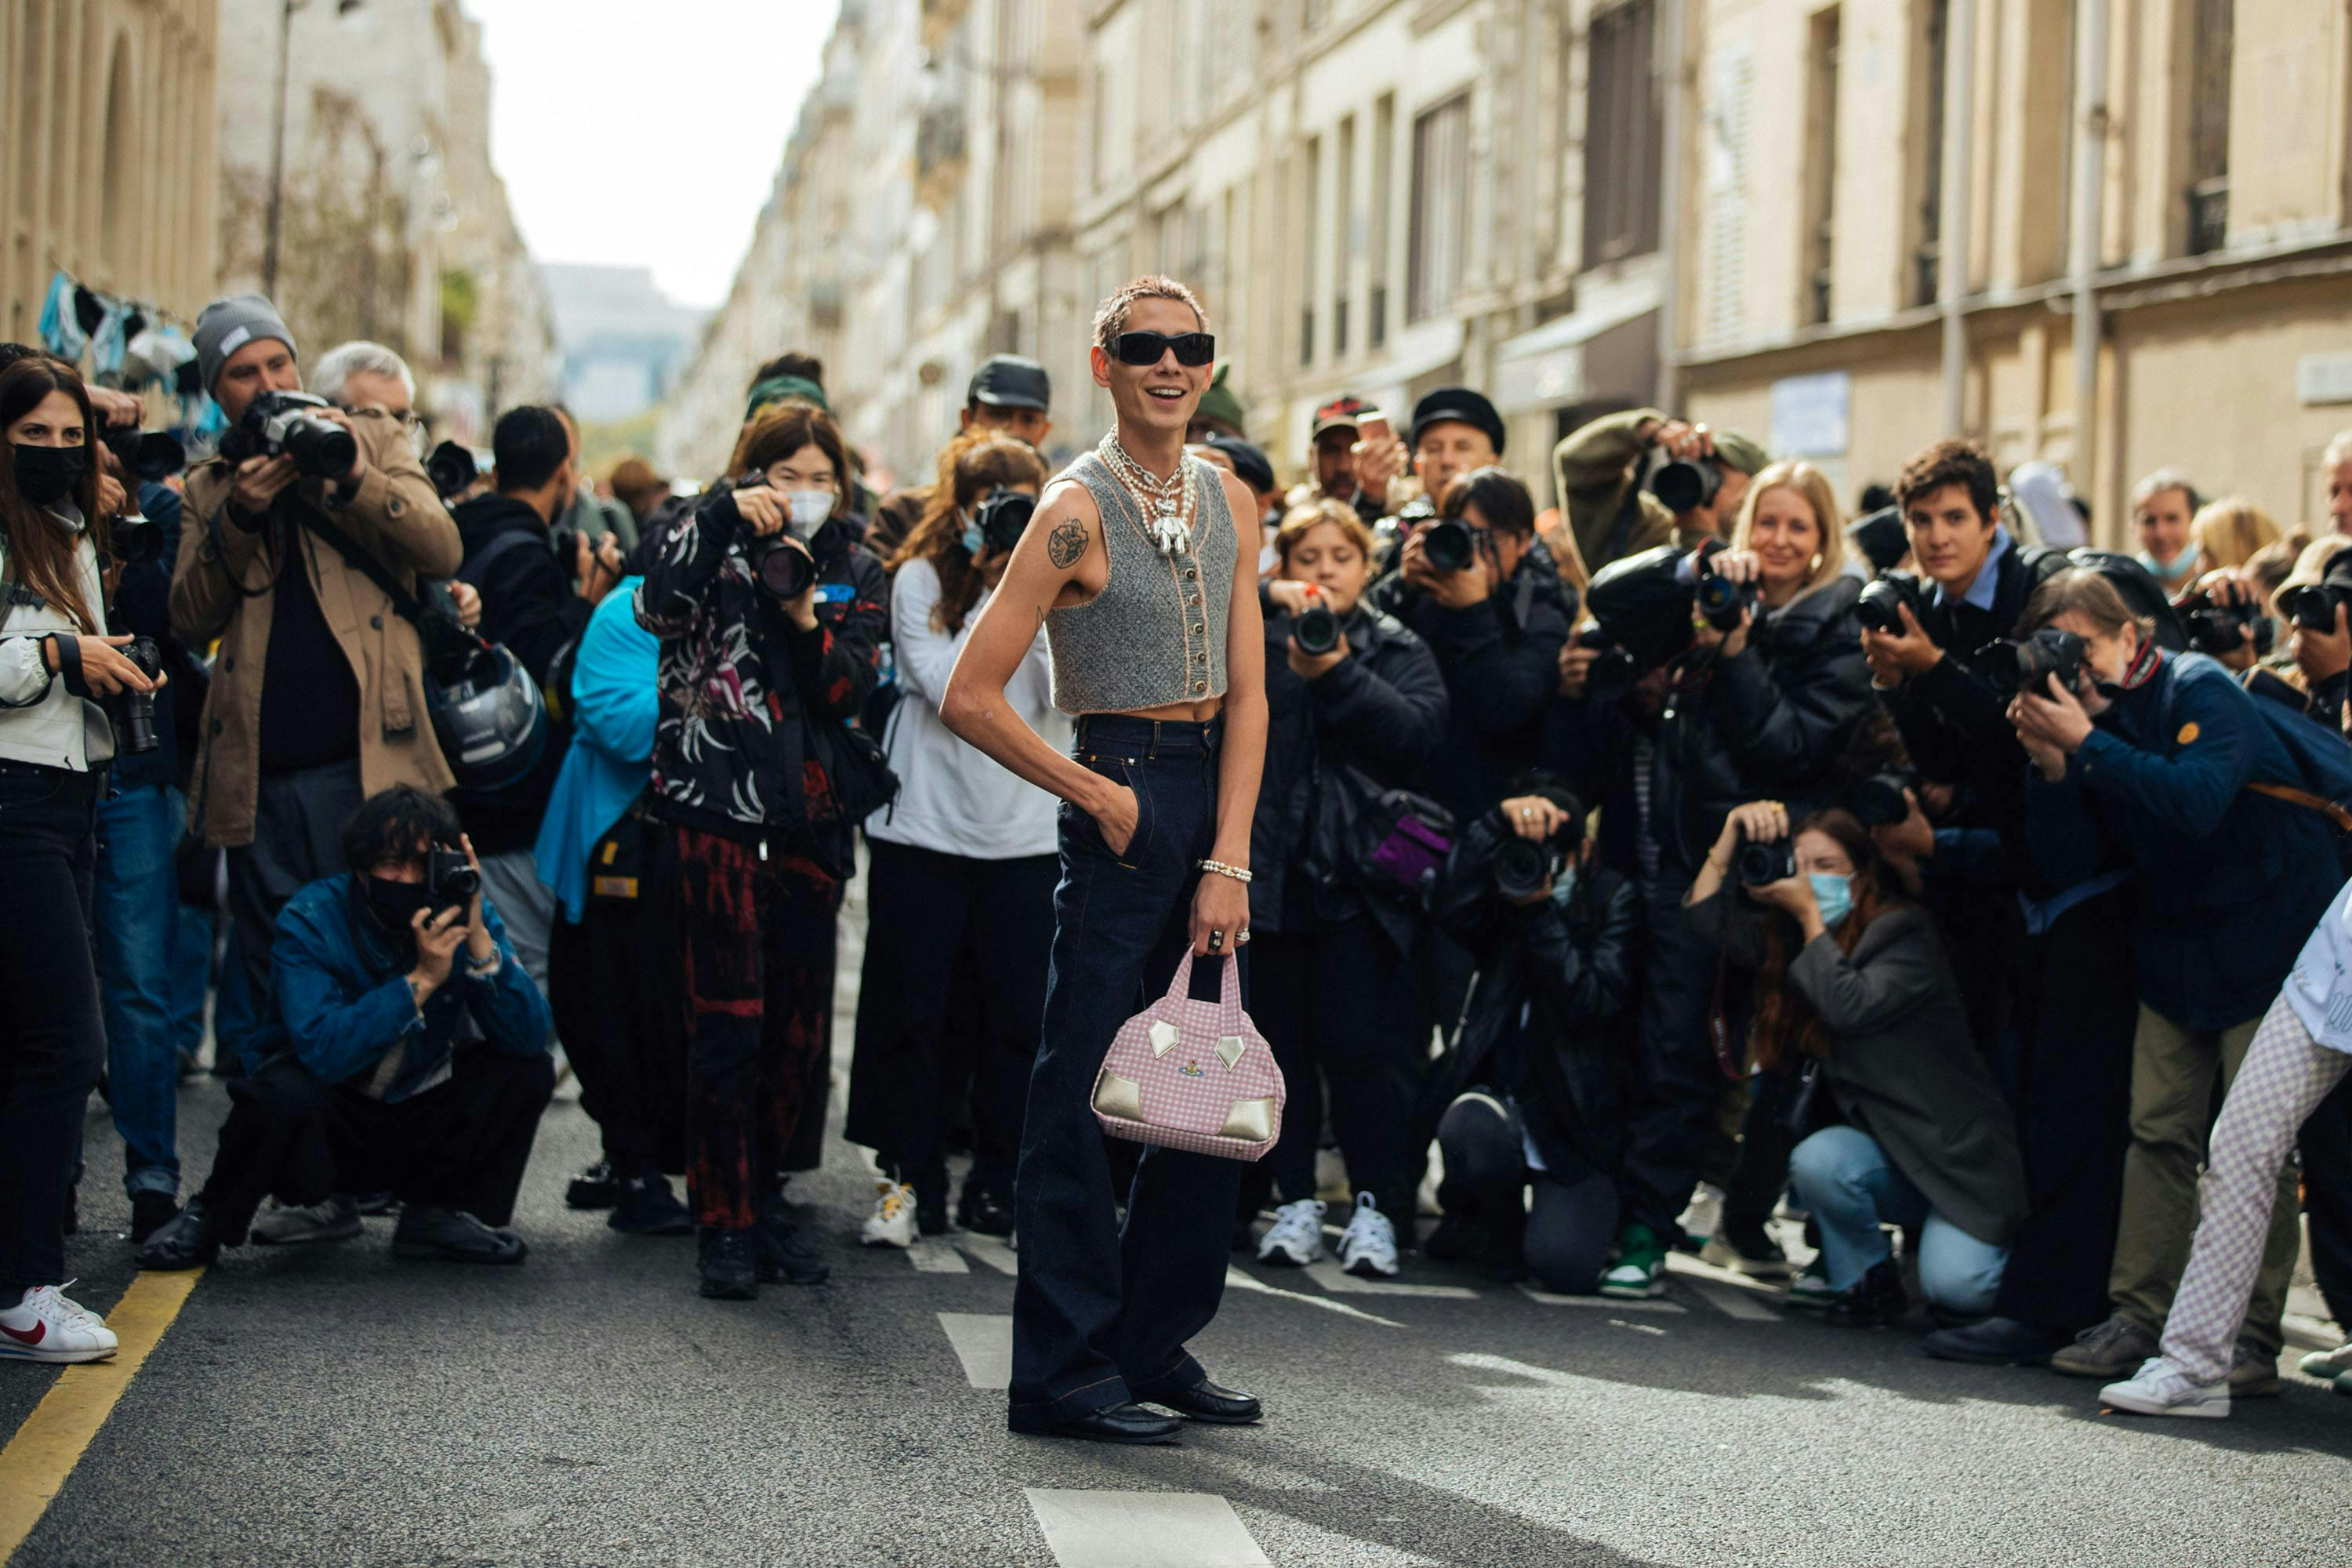 paris paparazzi person human shoe clothing footwear apparel photographer sunglasses accessories